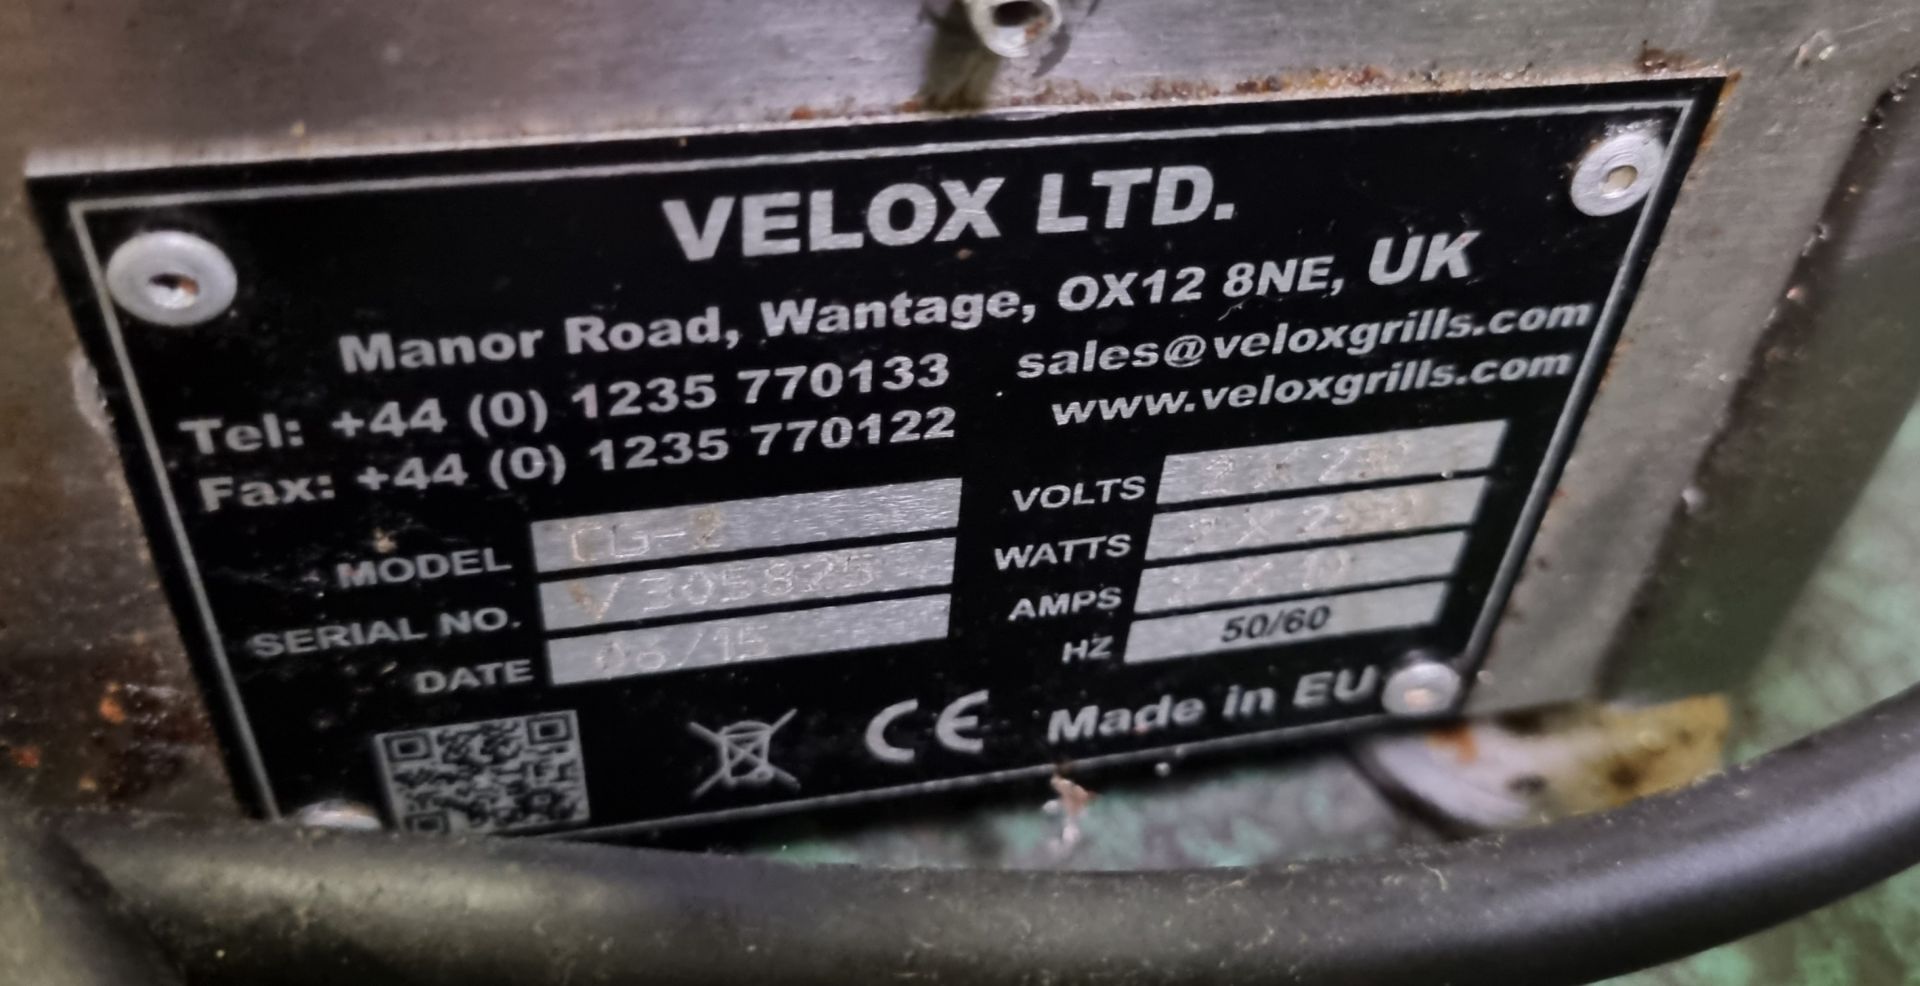 Velox Ltd CG-2 double contact/ panini grill - Image 5 of 5